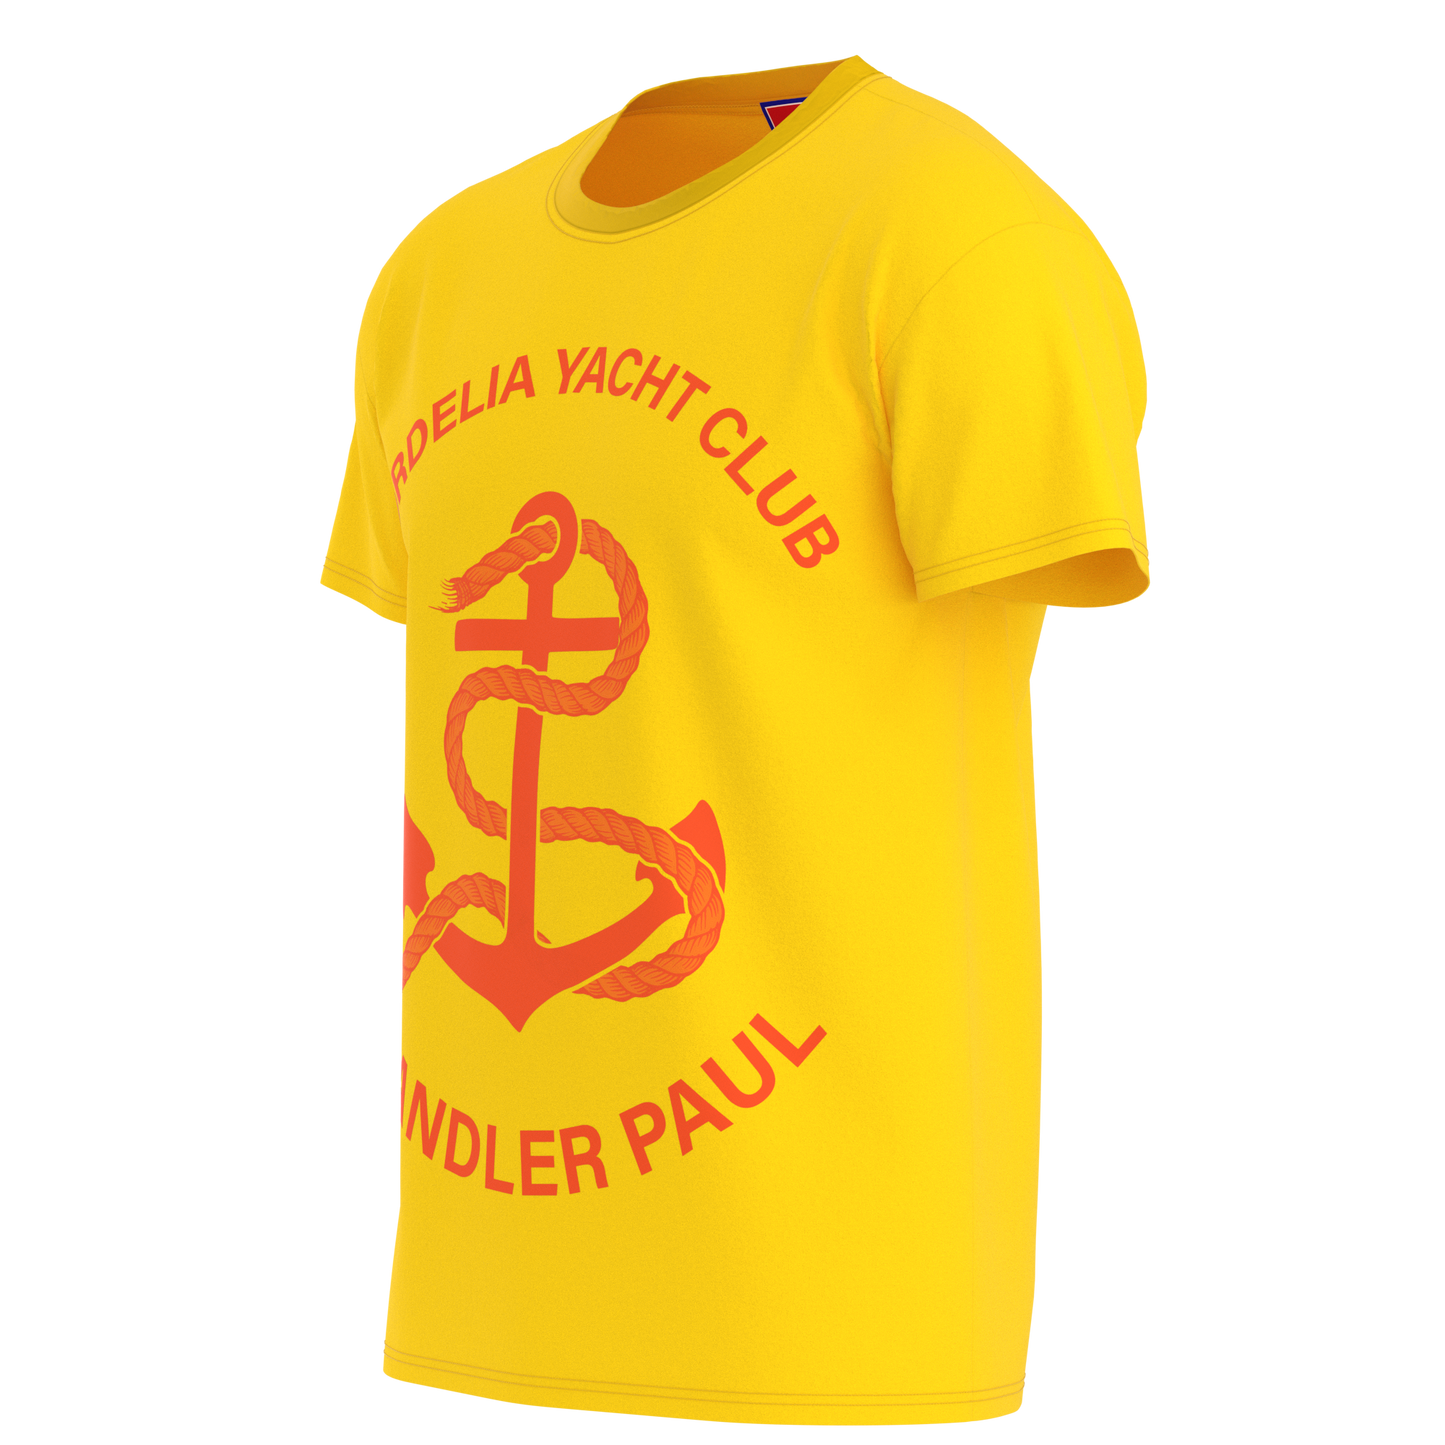 Cordelia Yacht Club T-Shirt